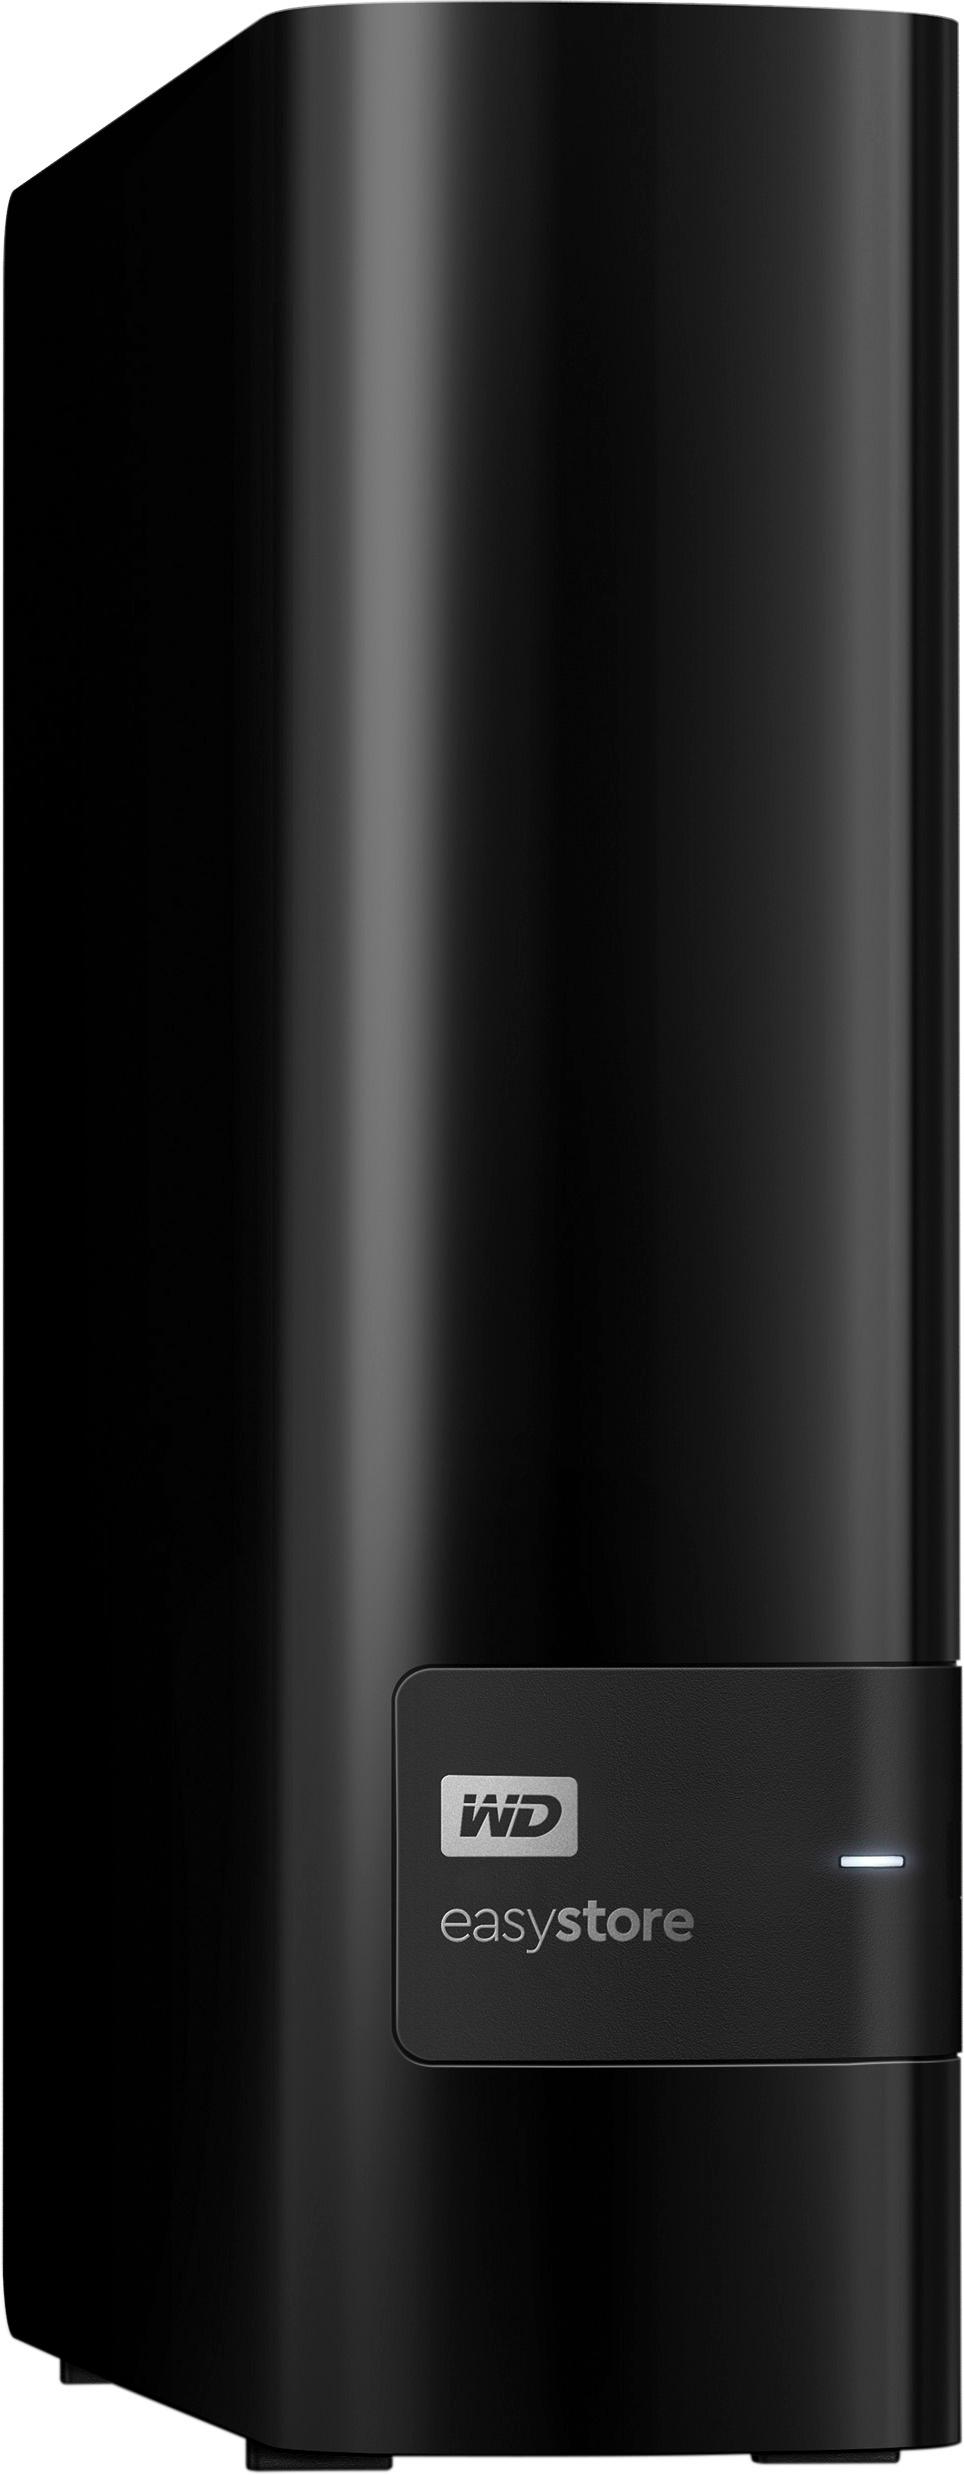 Wd Easystore 8tb External Usb 3 0 Hard Drive Black Wdbcka0080hbk Nesn Best Buy